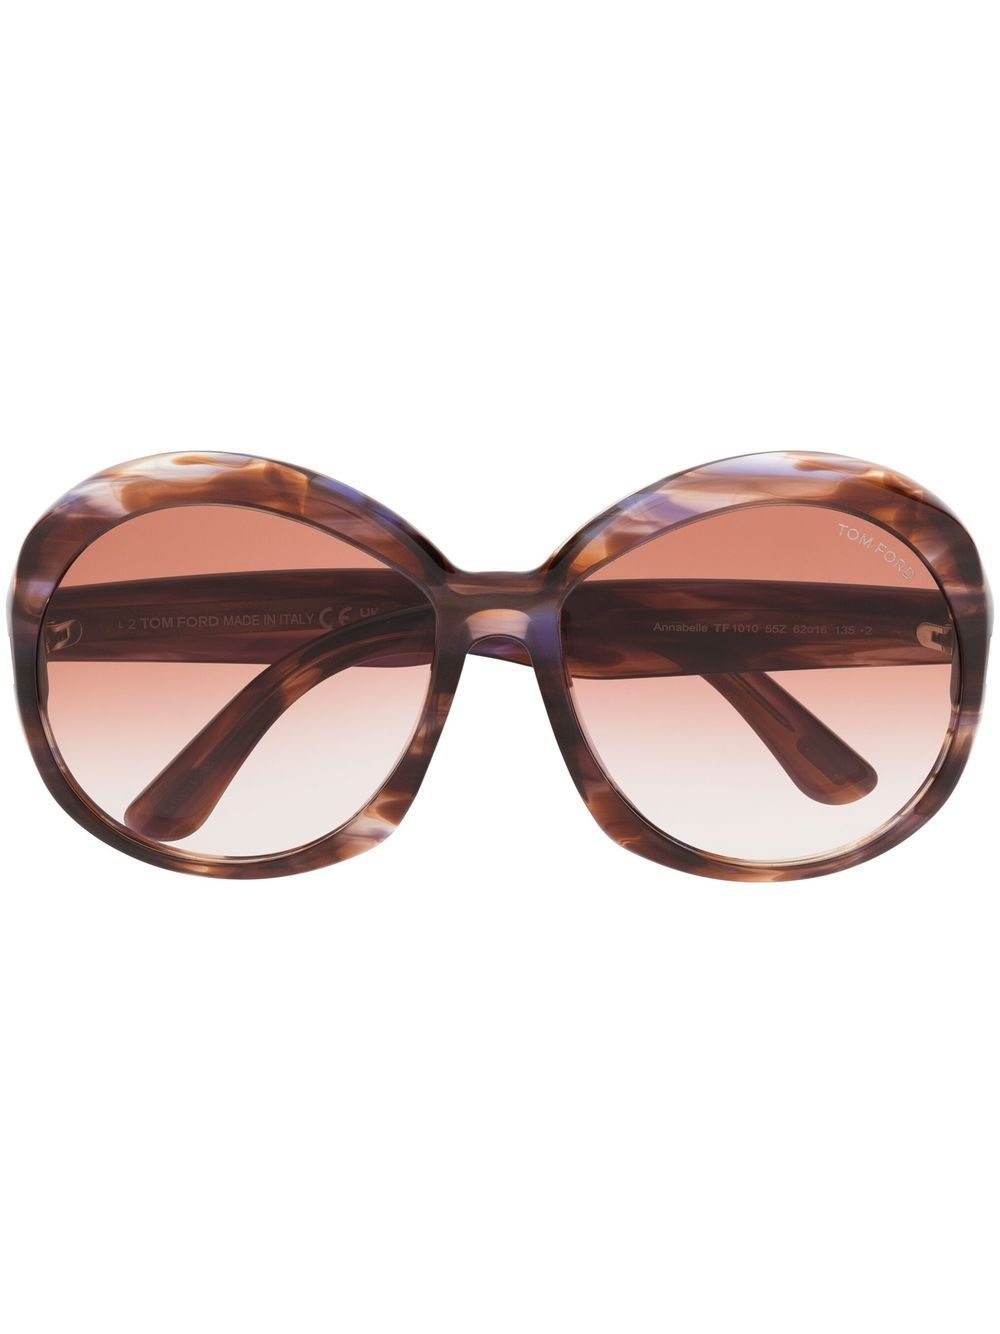 TOM FORD Eyewear marbled round-frame sunglasses - Brown von TOM FORD Eyewear